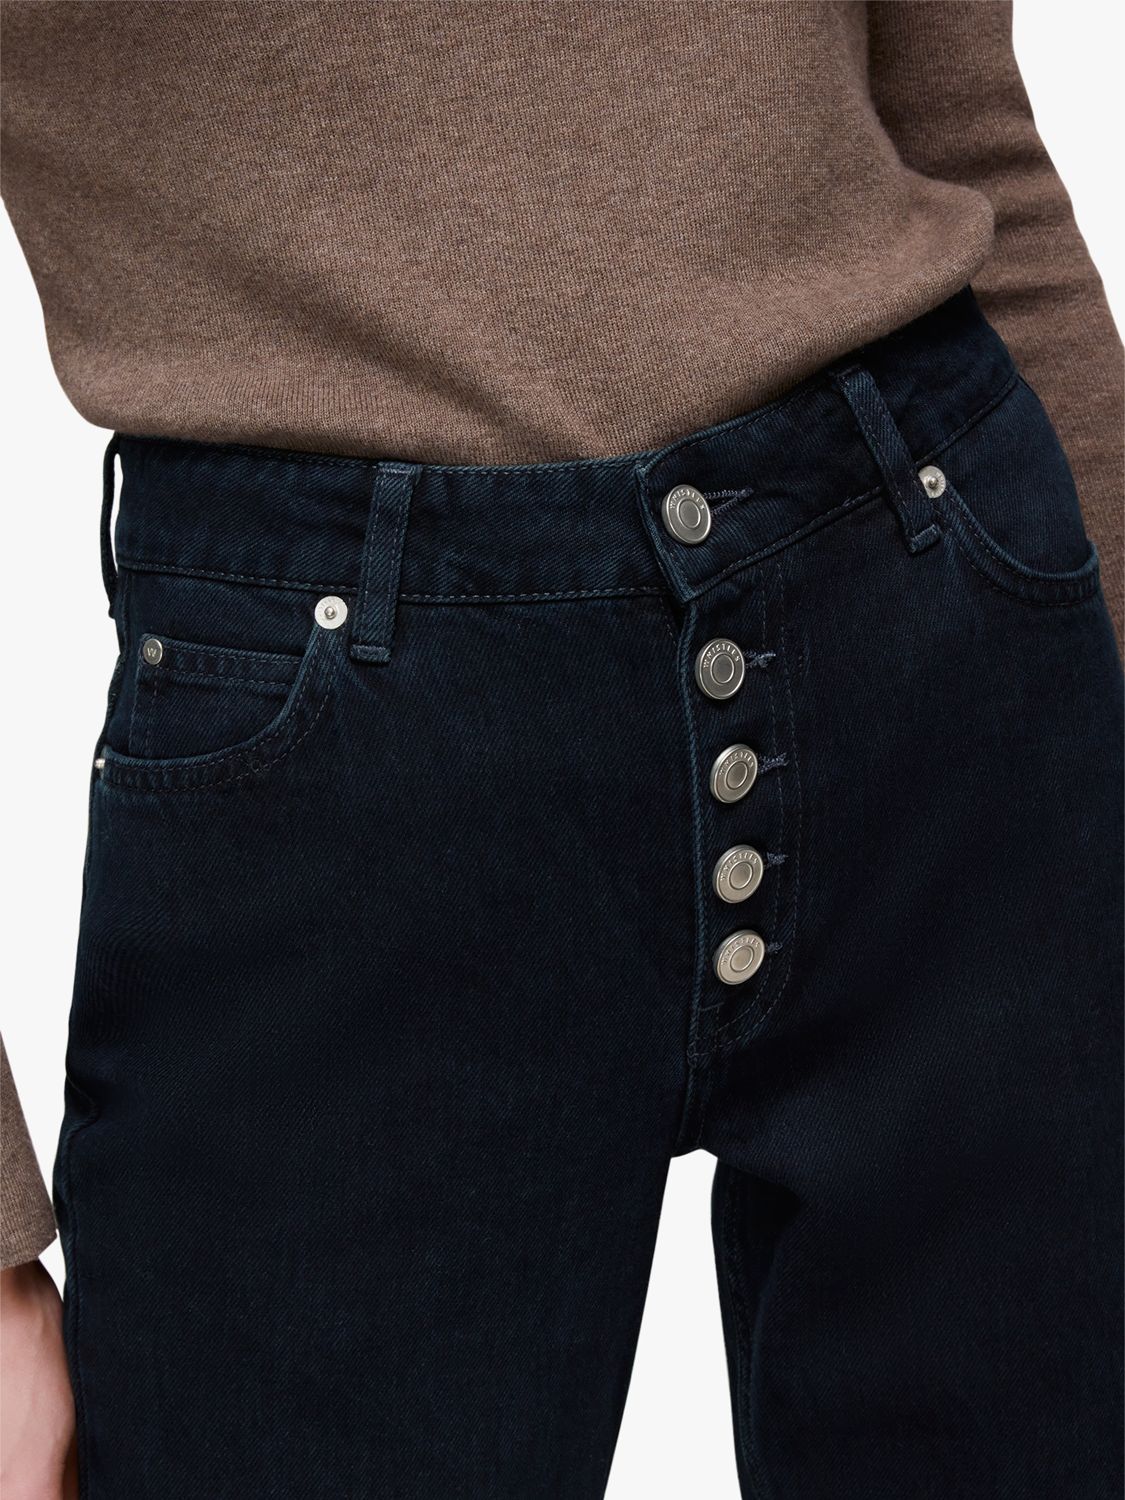 Whistles Authentic Hollie Button Front Jeans, Dark Denim, 26